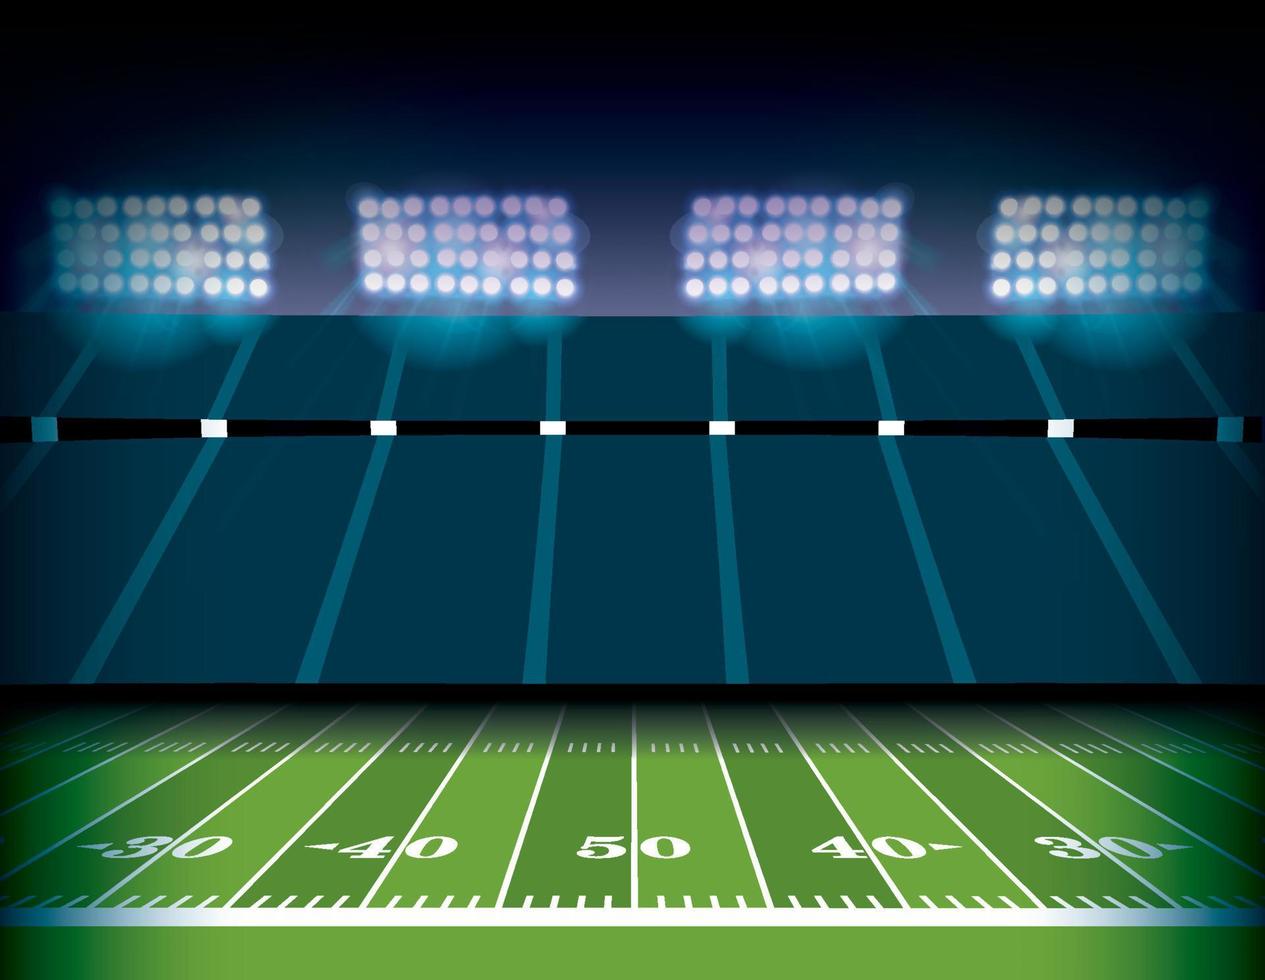 American Football Stadium and Field Background Illustration vector